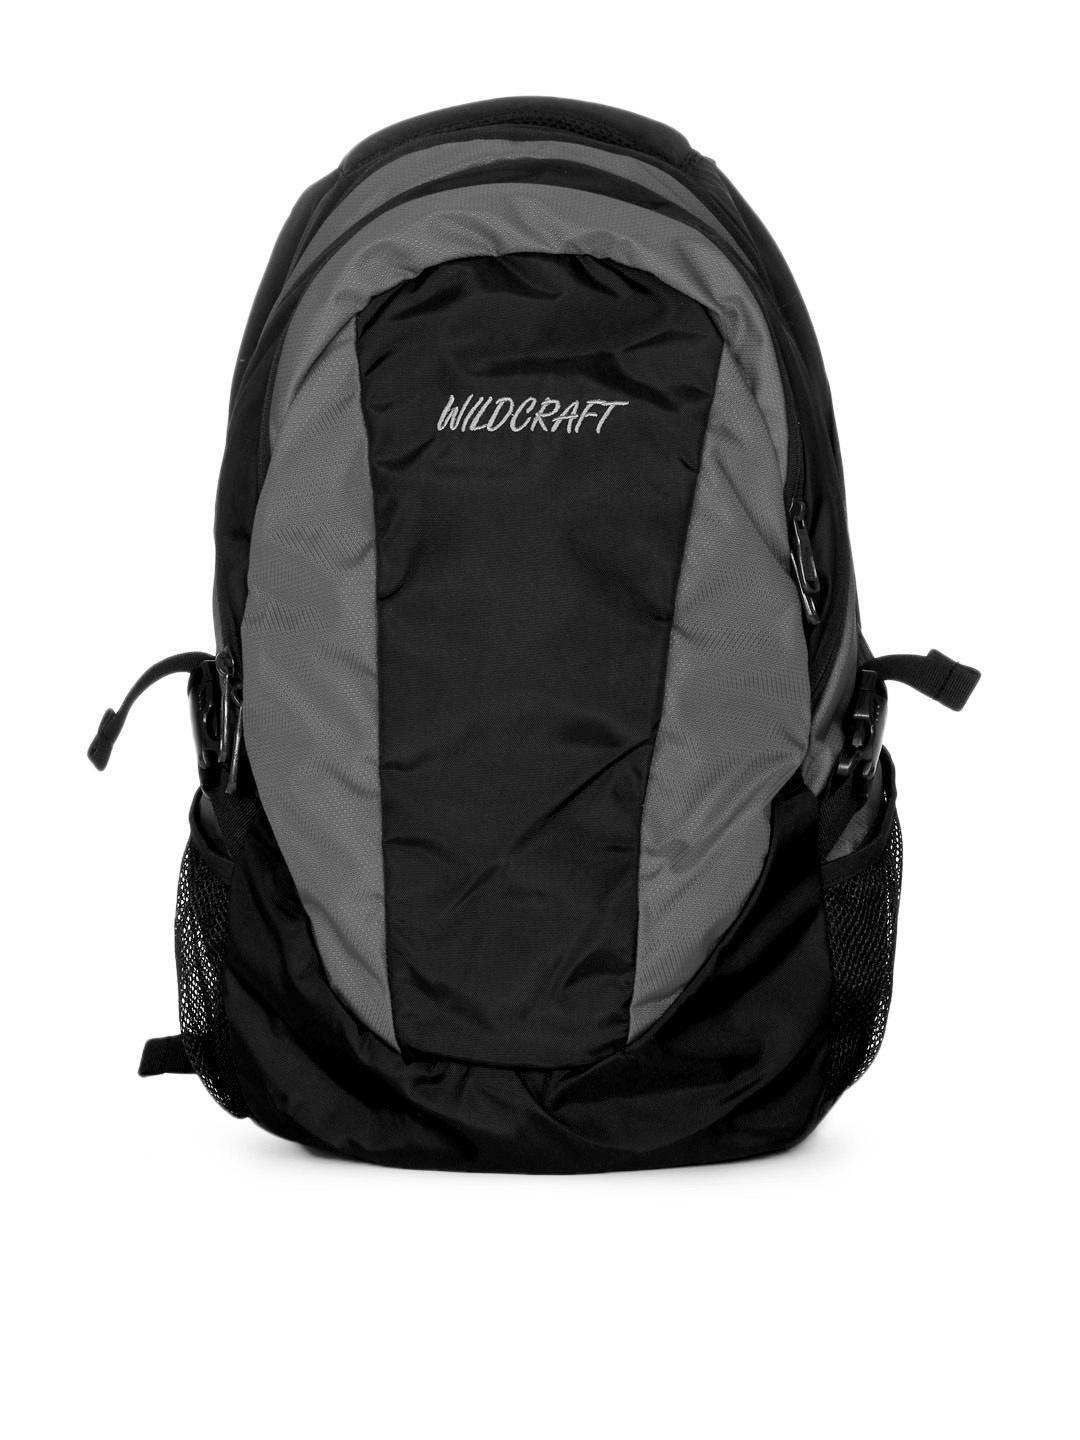 Wildcraft Unisex Grey & Black Laptop Backpack